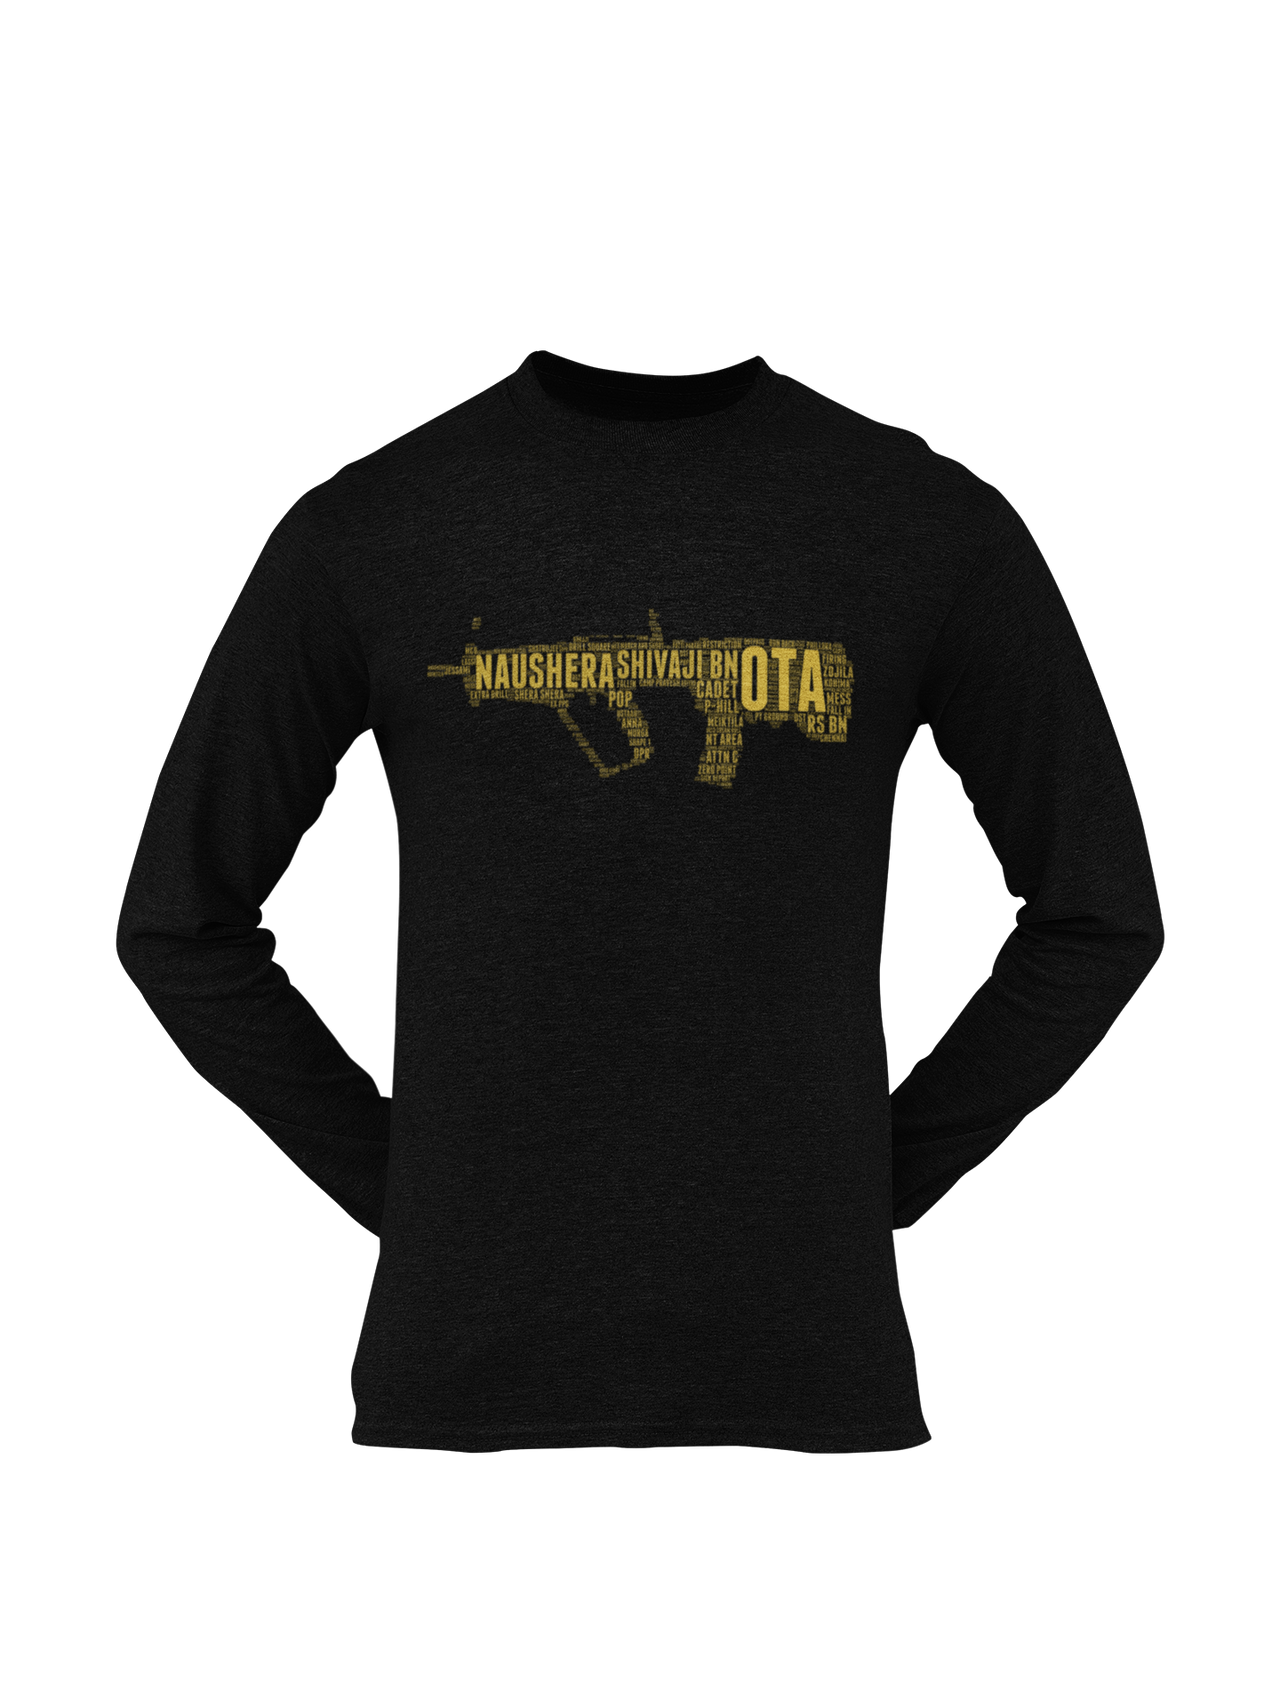 OTA T-shirt - Word Cloud Naushera - Tavor (Men)